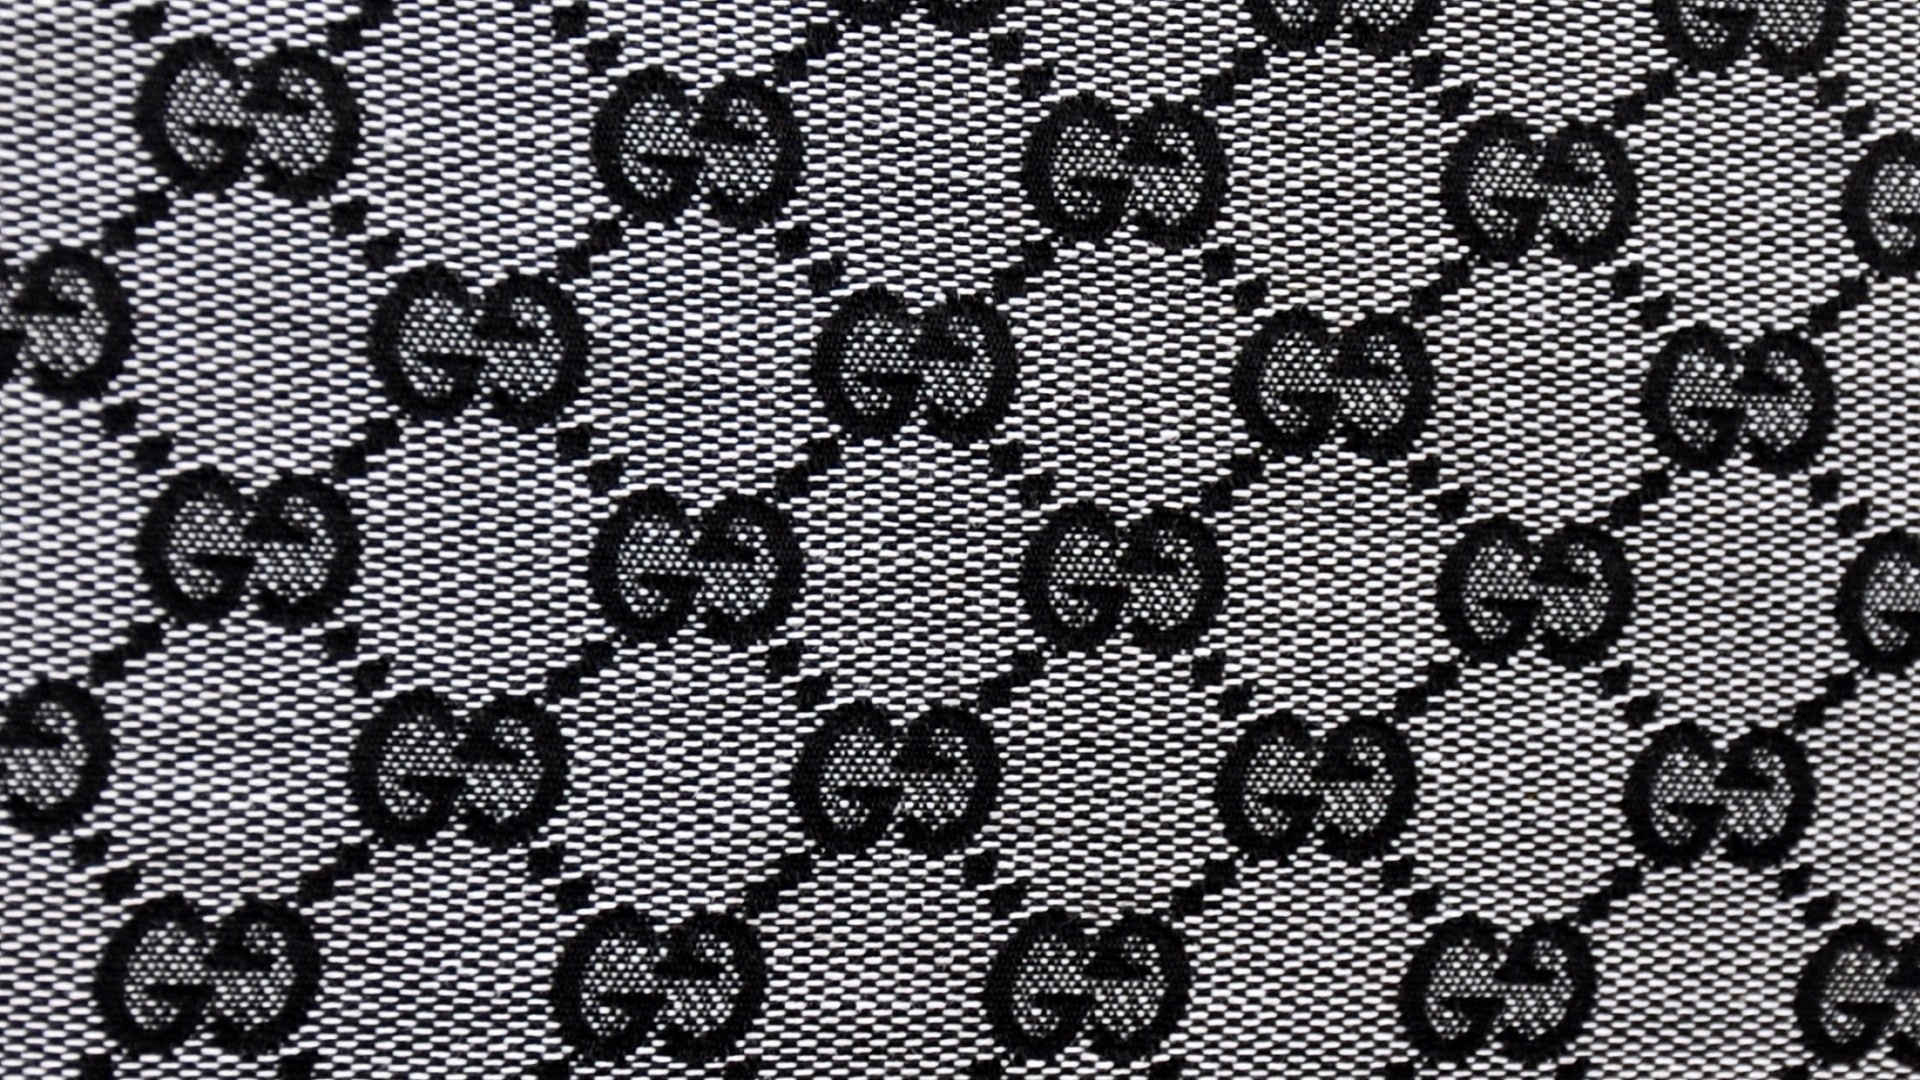 Gucci: Black and white, Luxury brand iconic pattern, Fashion. 1920x1080 Full HD Wallpaper.